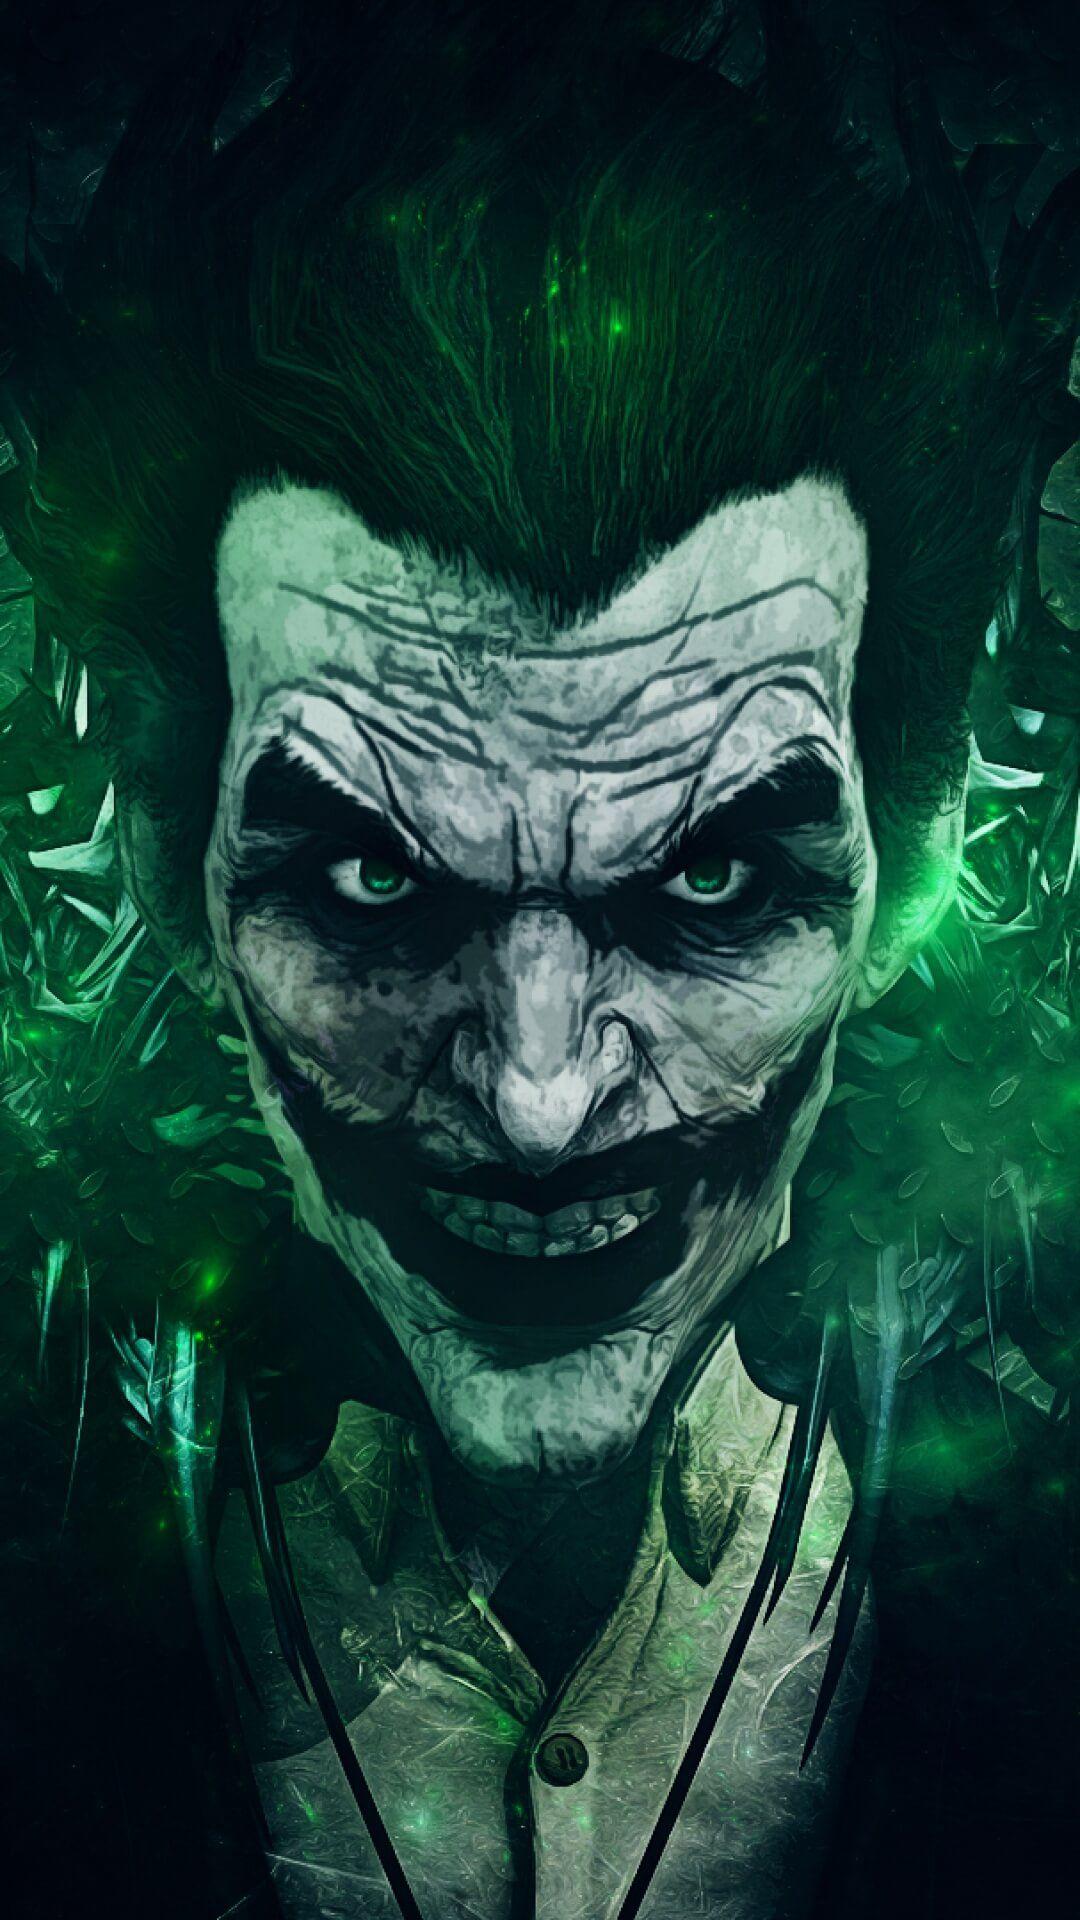  Cool  Joker  Wallpapers  Top Free Cool  Joker  Backgrounds  